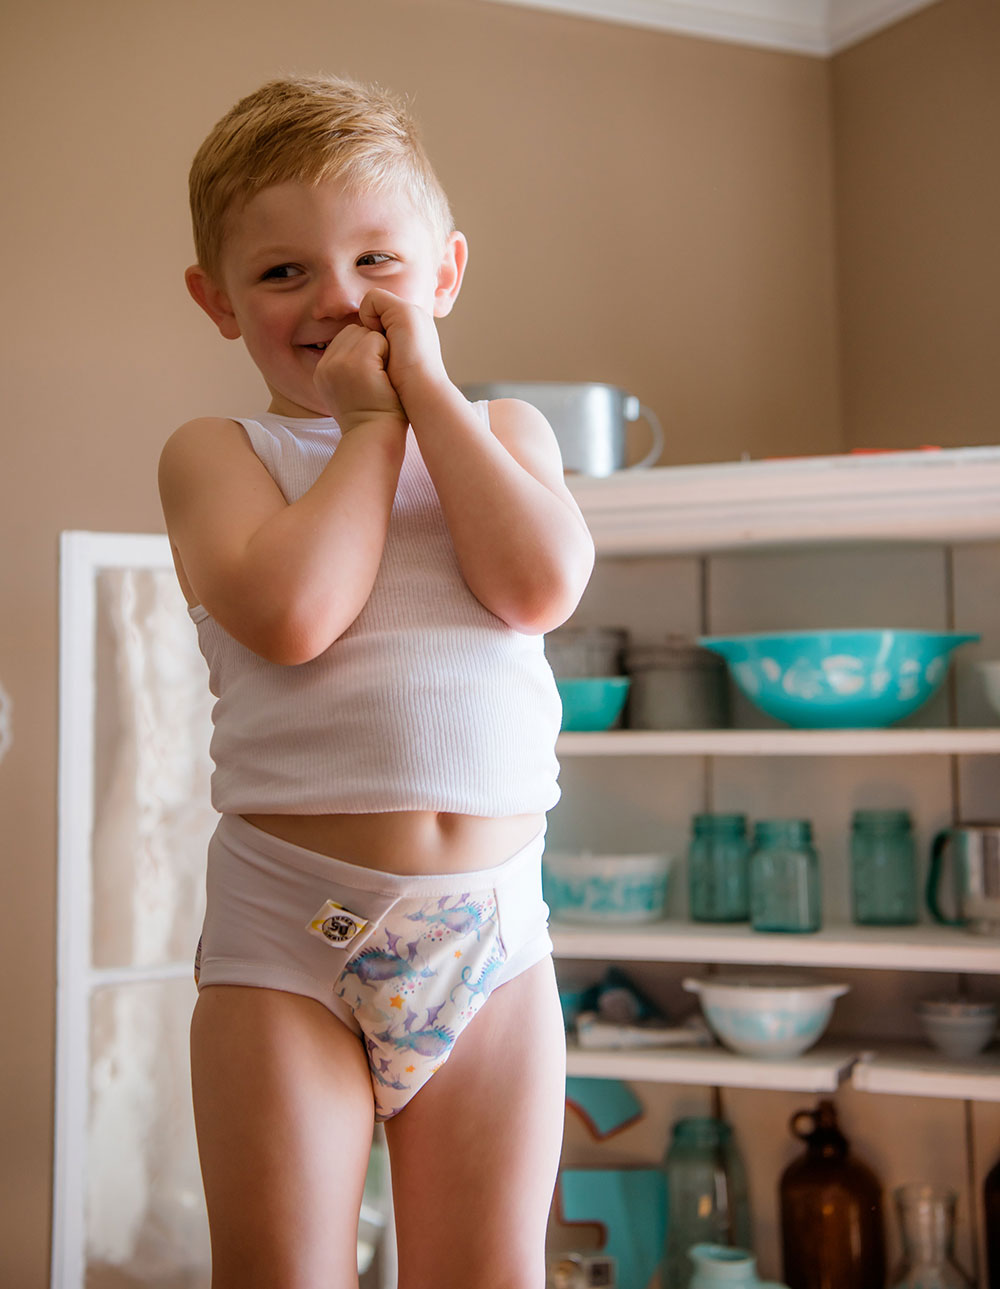 Swim Diaper Covers For Toddlers Plastic Underwear Covers For Potty Training  Diaper Cover Rubber Pants For Toddlers Plastic Pants Rubber Training Pants